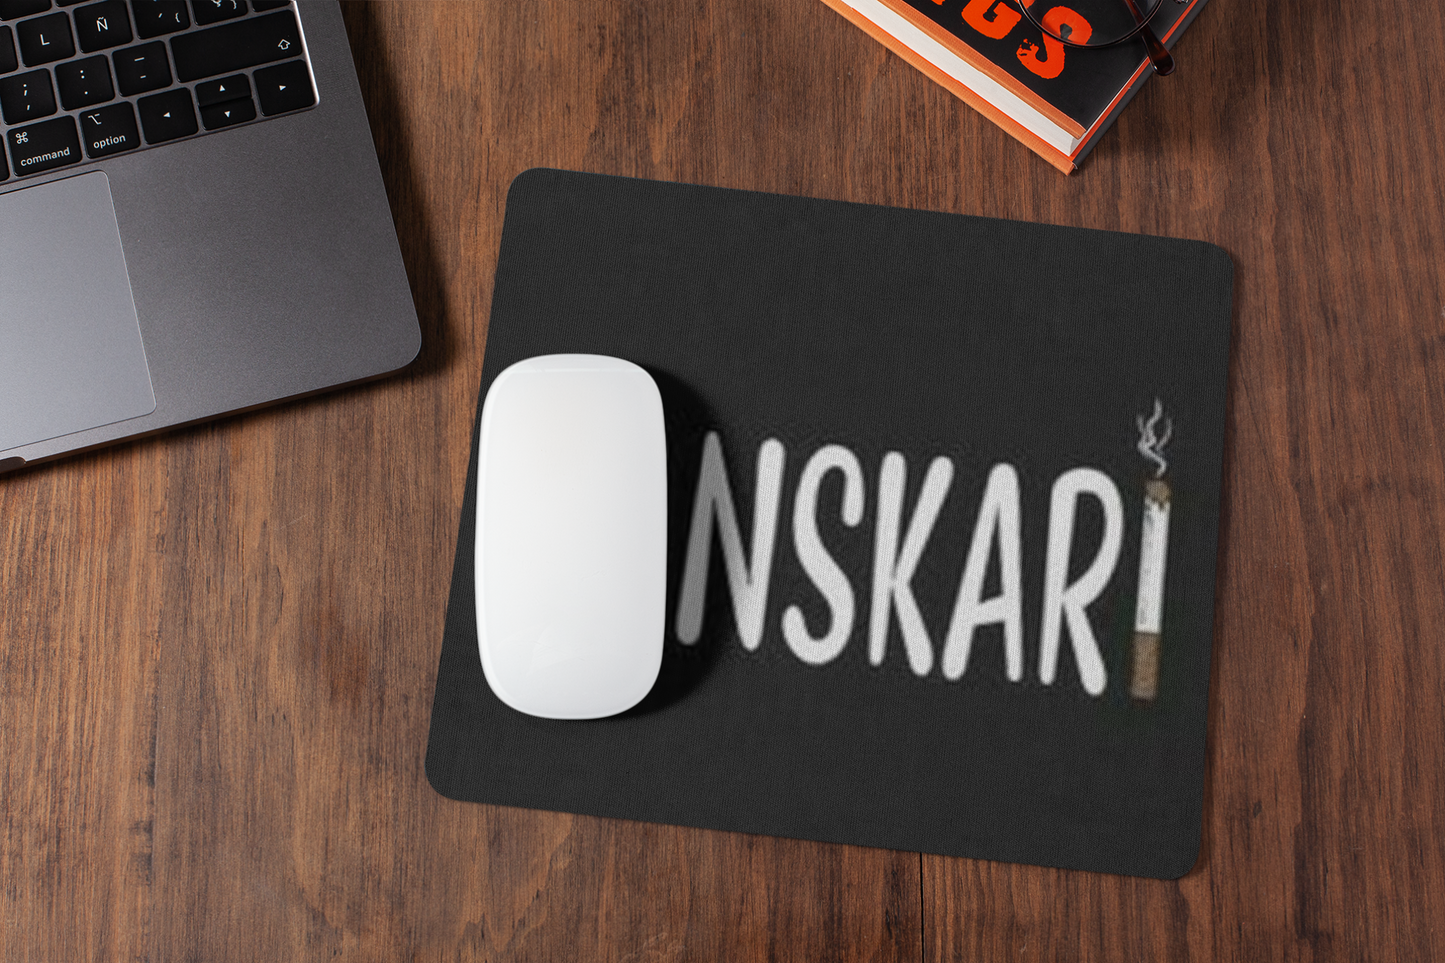 Sanskari mousepad for laptop and desktop with Rubber Base - Anti Skid